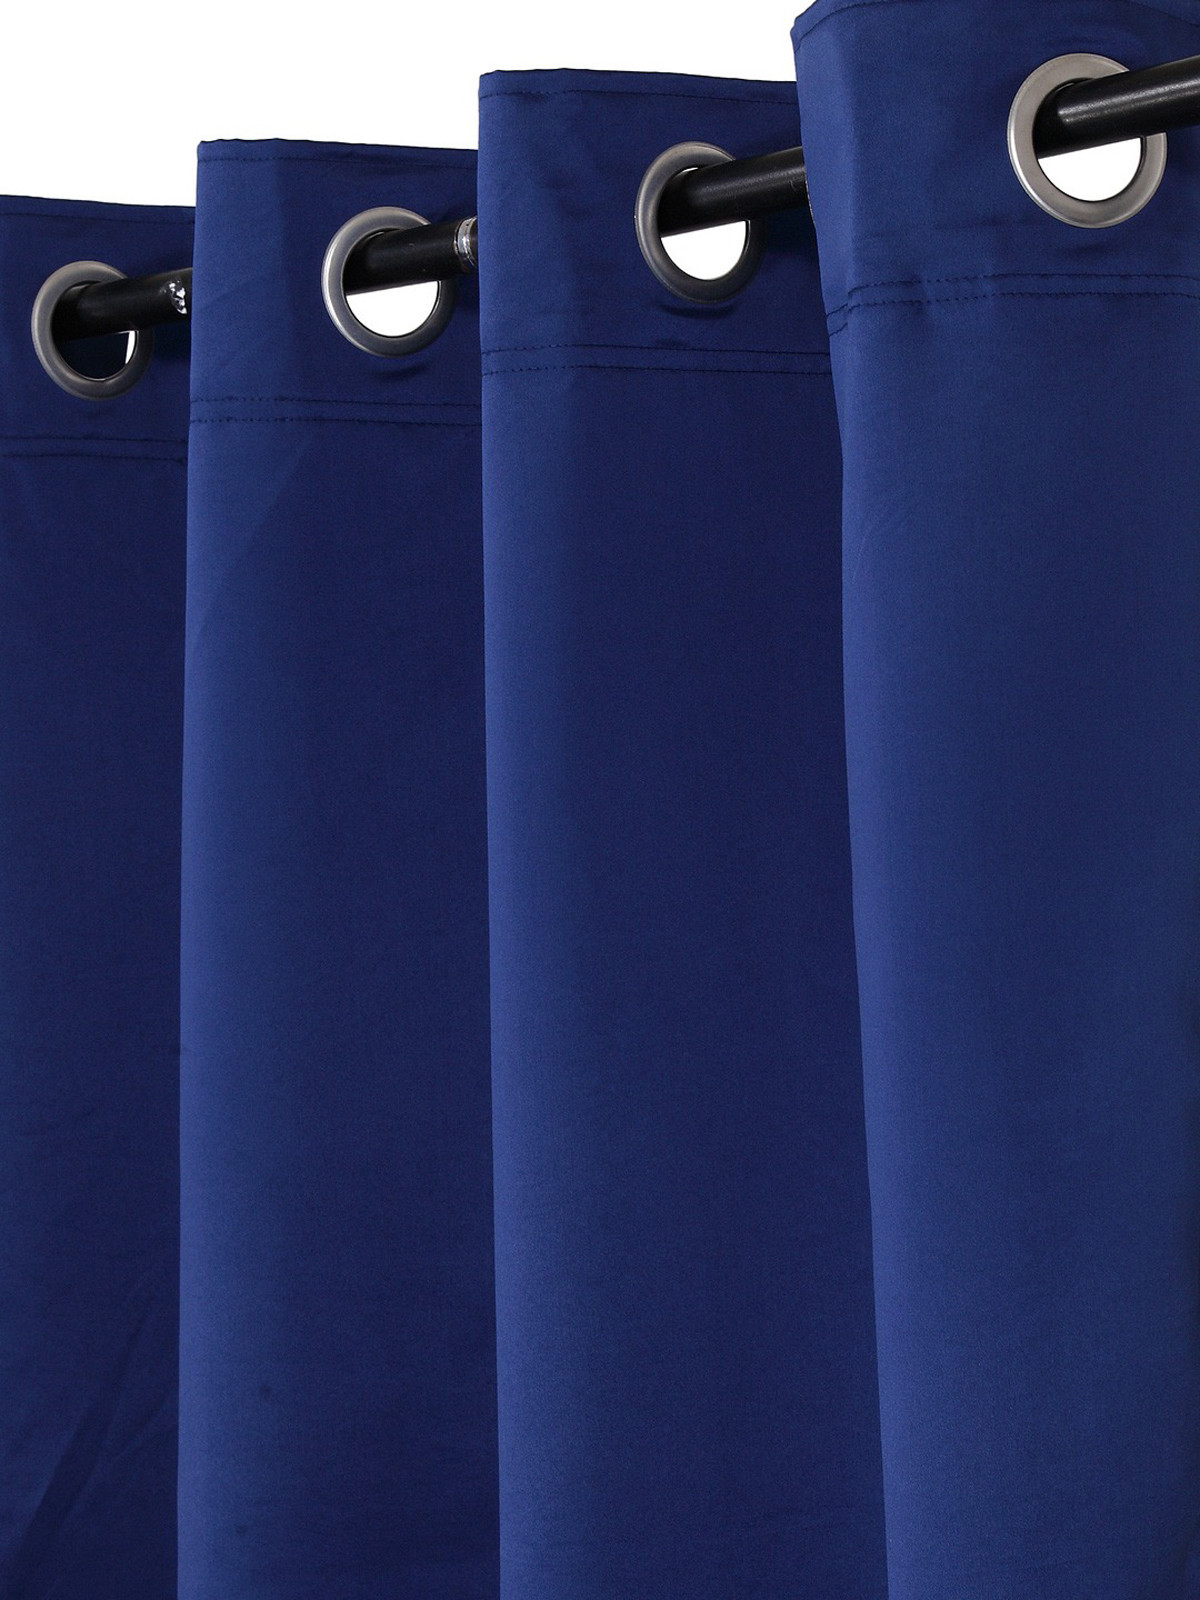 Kuber Industries Self Print Room Darkening Door Curtain, 7 Feet (Navy Blue)